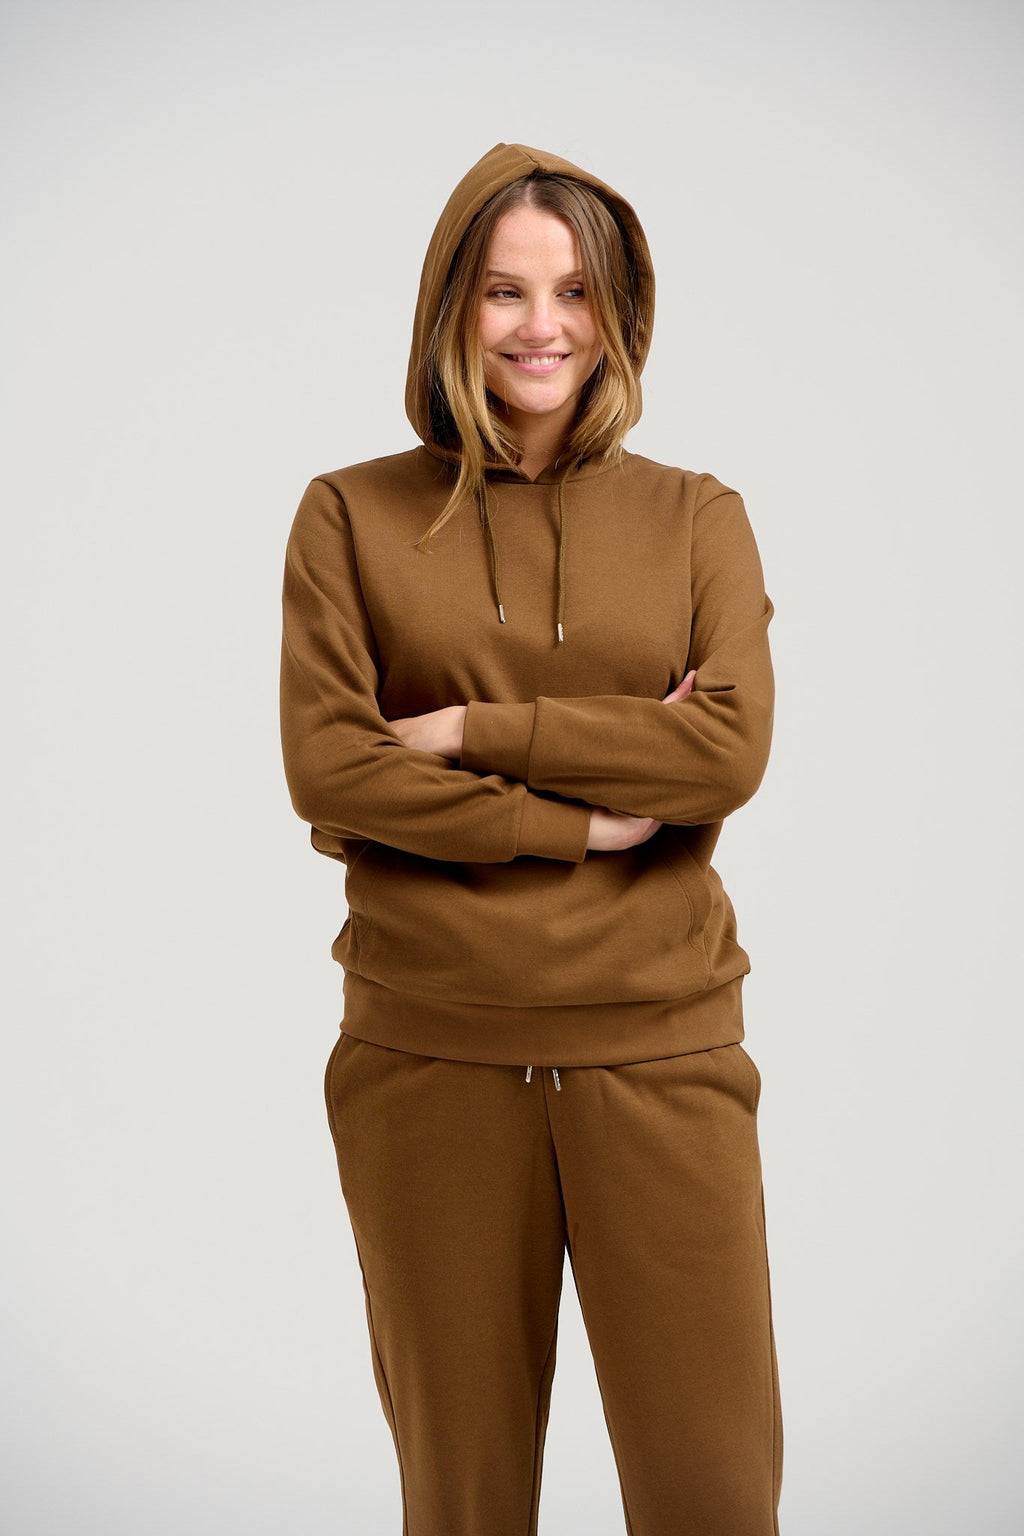 Basic Sweatsuit with Hoodie (Brown) - Package Deal (Women)